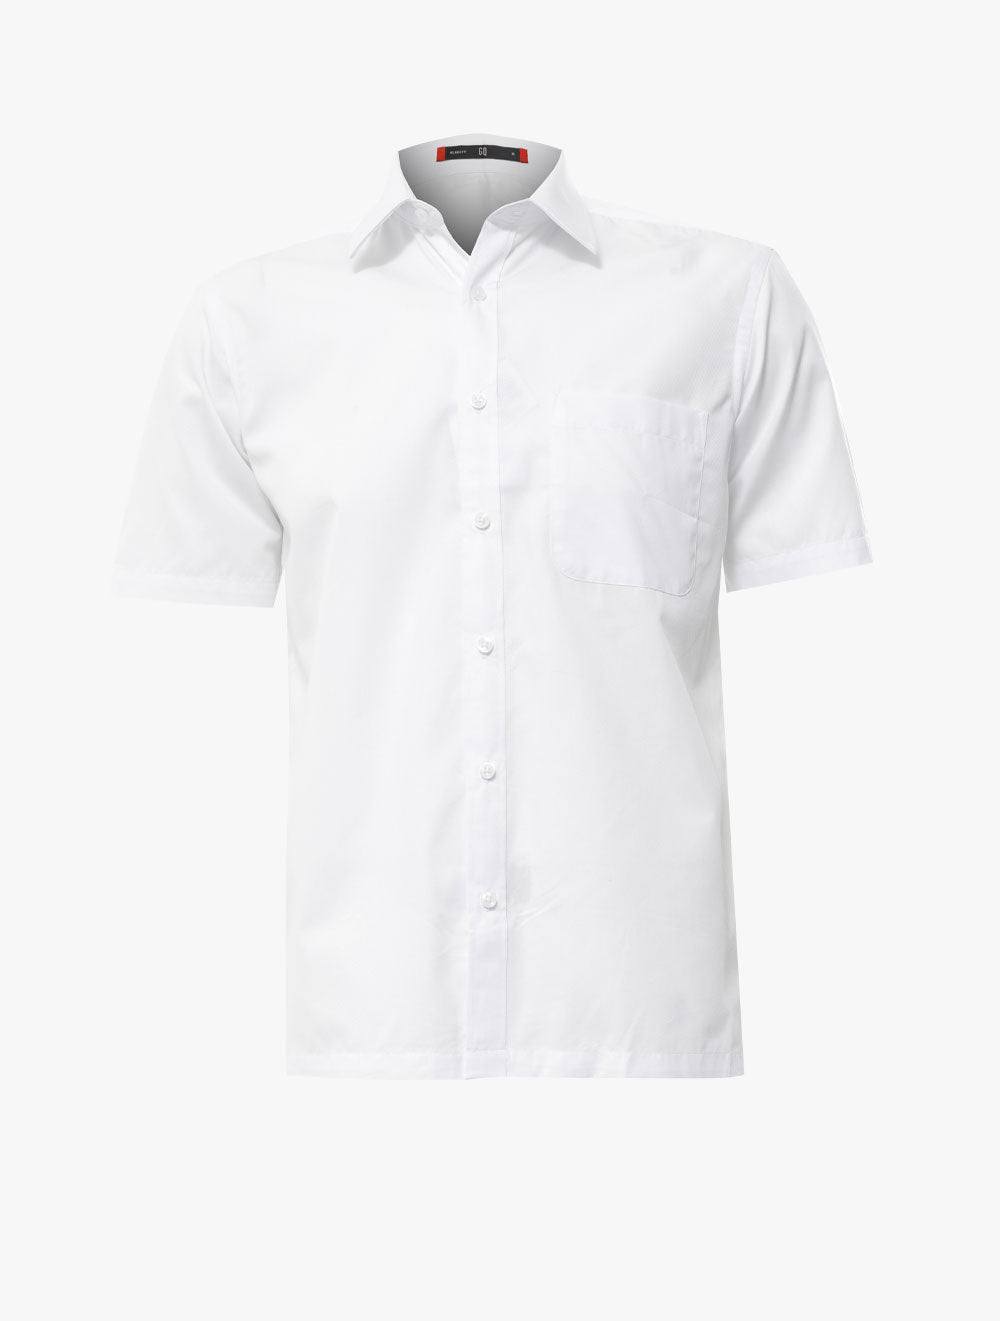 GQ
Casual Short Sleeve Shirt - 1623056